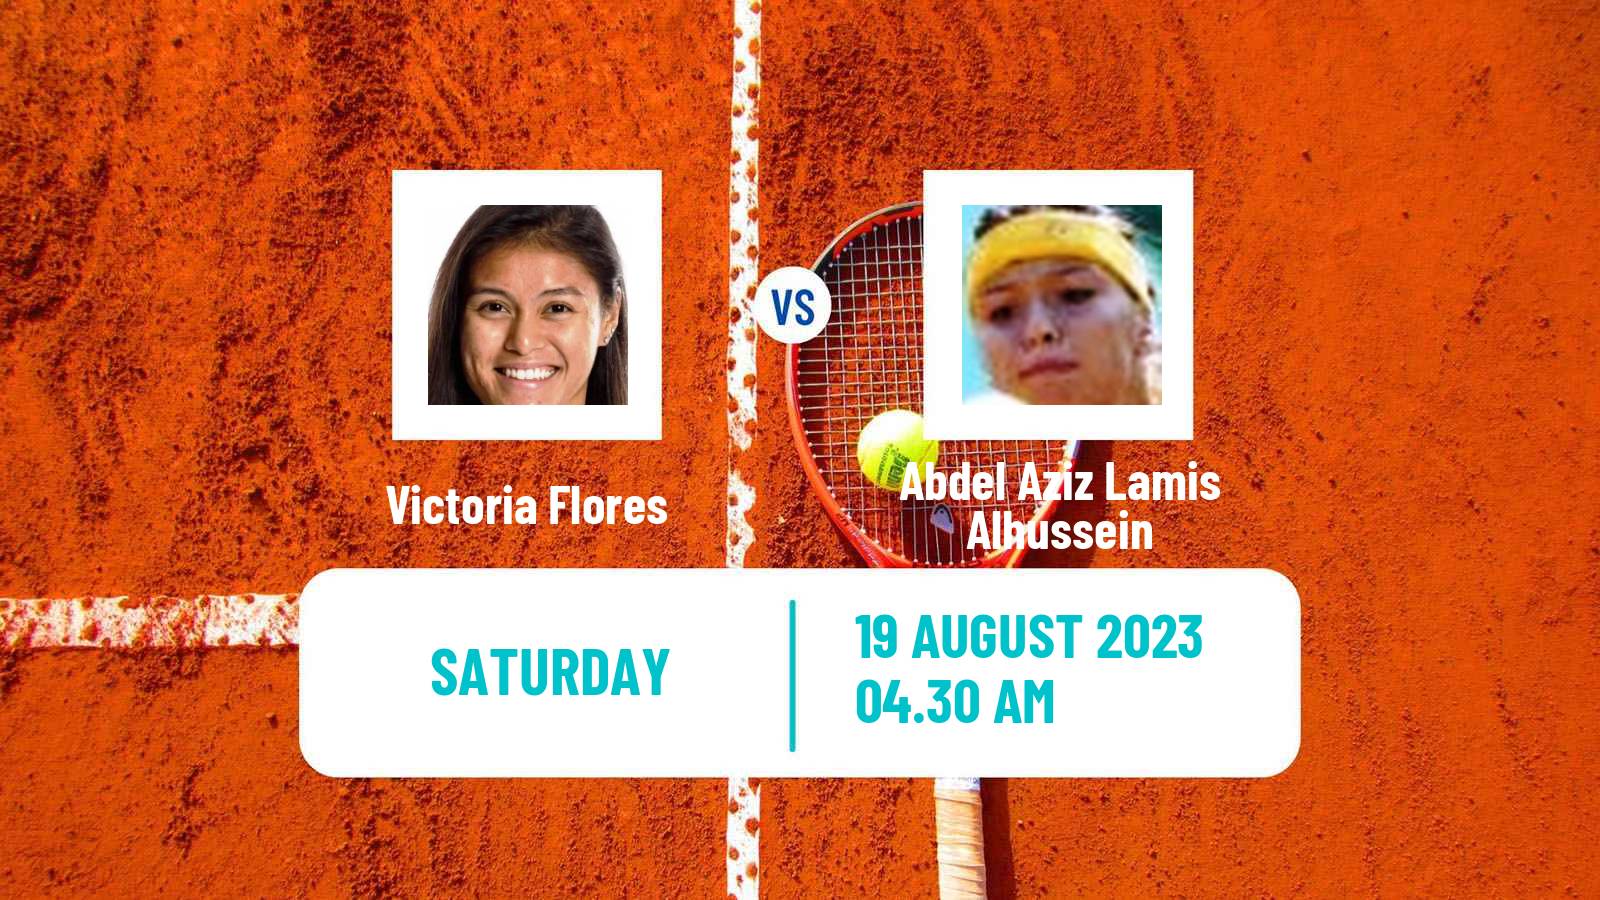 Tennis ITF W15 Monastir 28 Women Victoria Flores - Abdel Aziz Lamis Alhussein